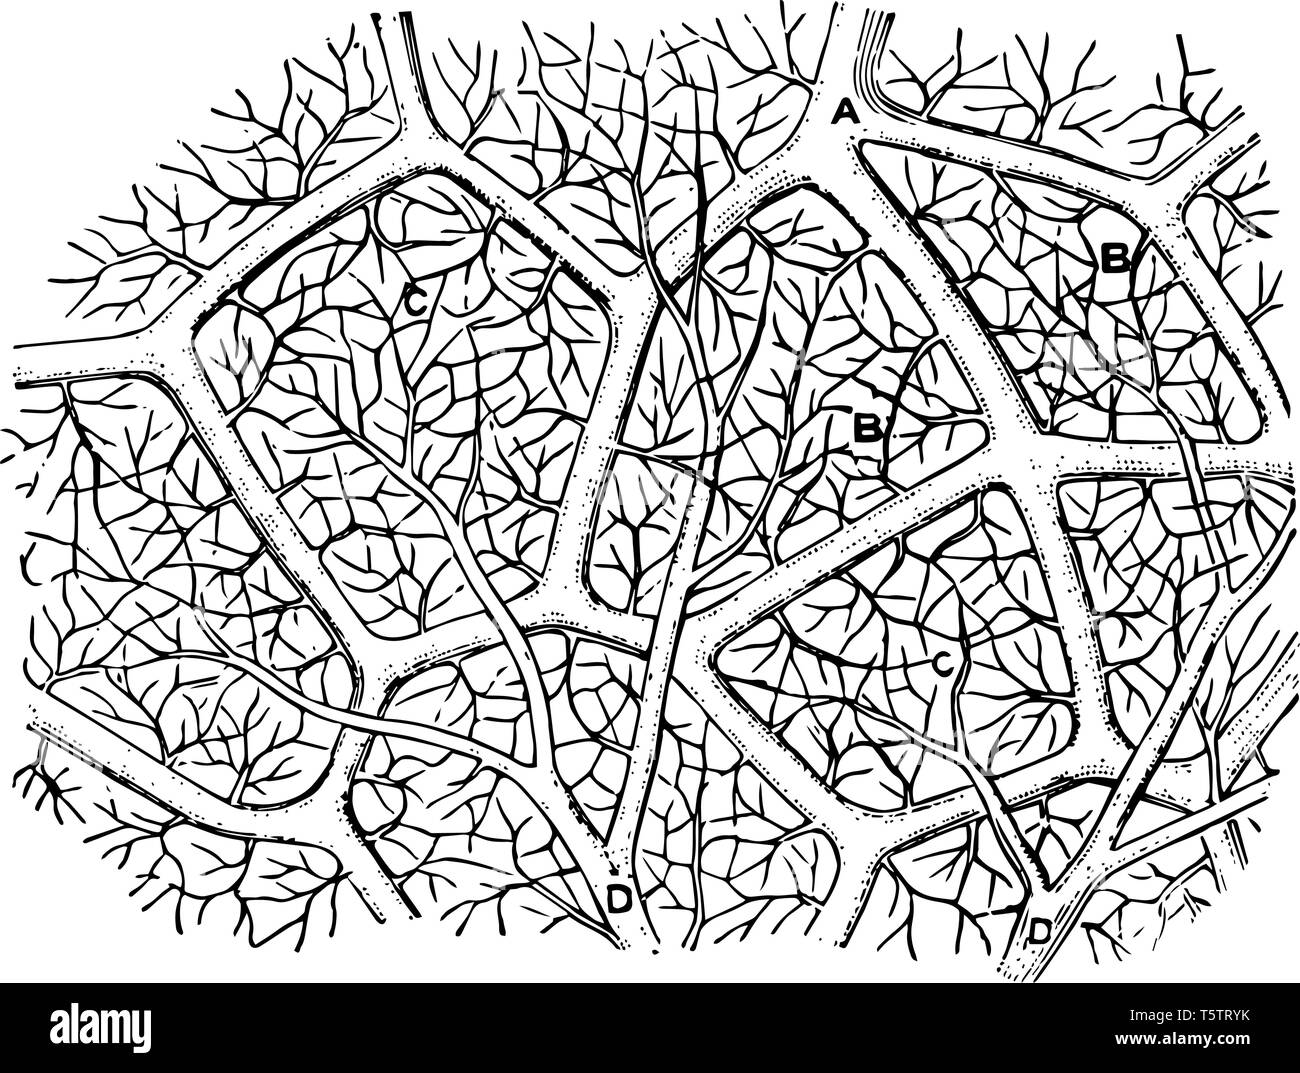 Alveoli sacs Black and White Stock Photos & Images - Alamy